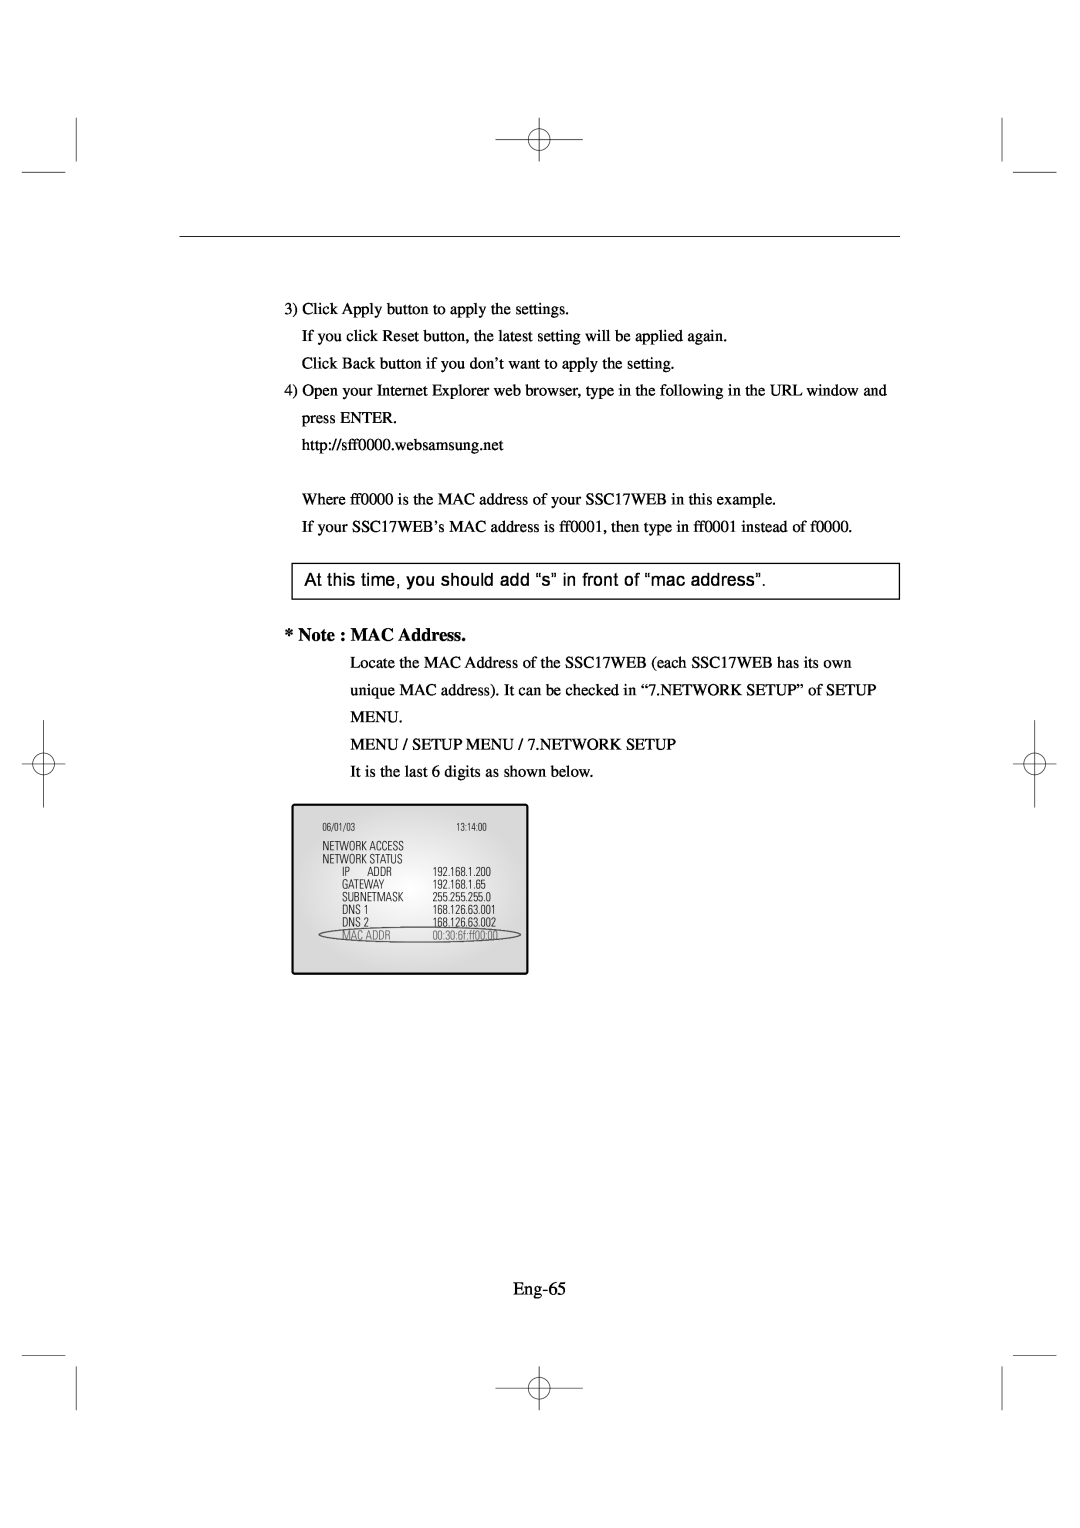 Samsung SSC17WEB manual Note MAC Address, Eng-65 